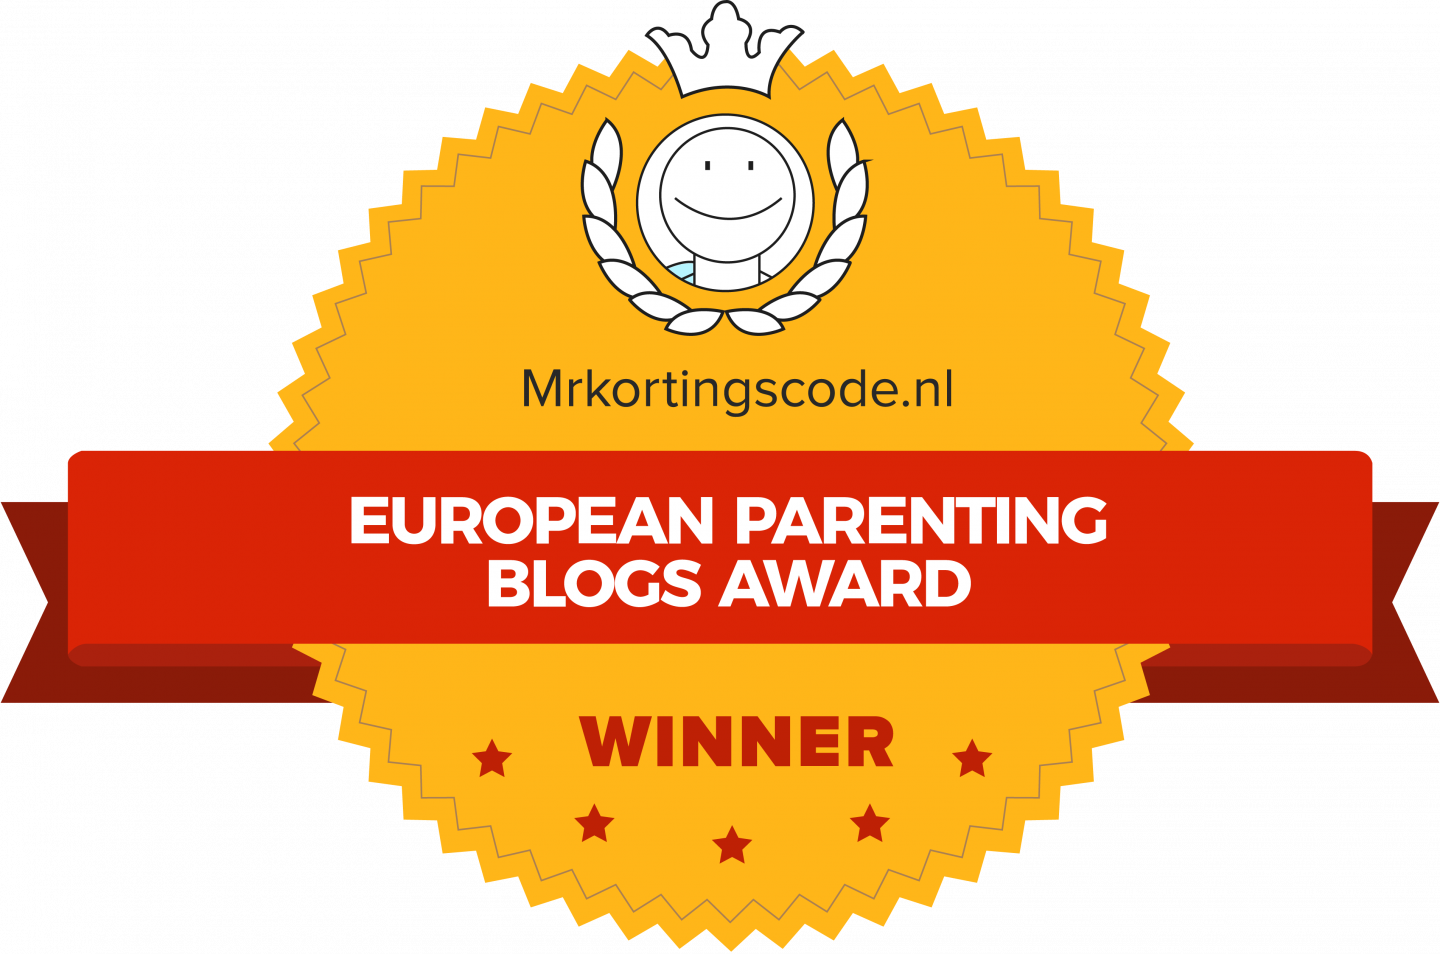 European Parenting Blogs Award, parenting blog award winner, award winning blogger, John Adams award winning blogger, dadbloguk, dadbloguk.com, dad blog uk, school run dad, sahd, wahd, Mr Kortings Code